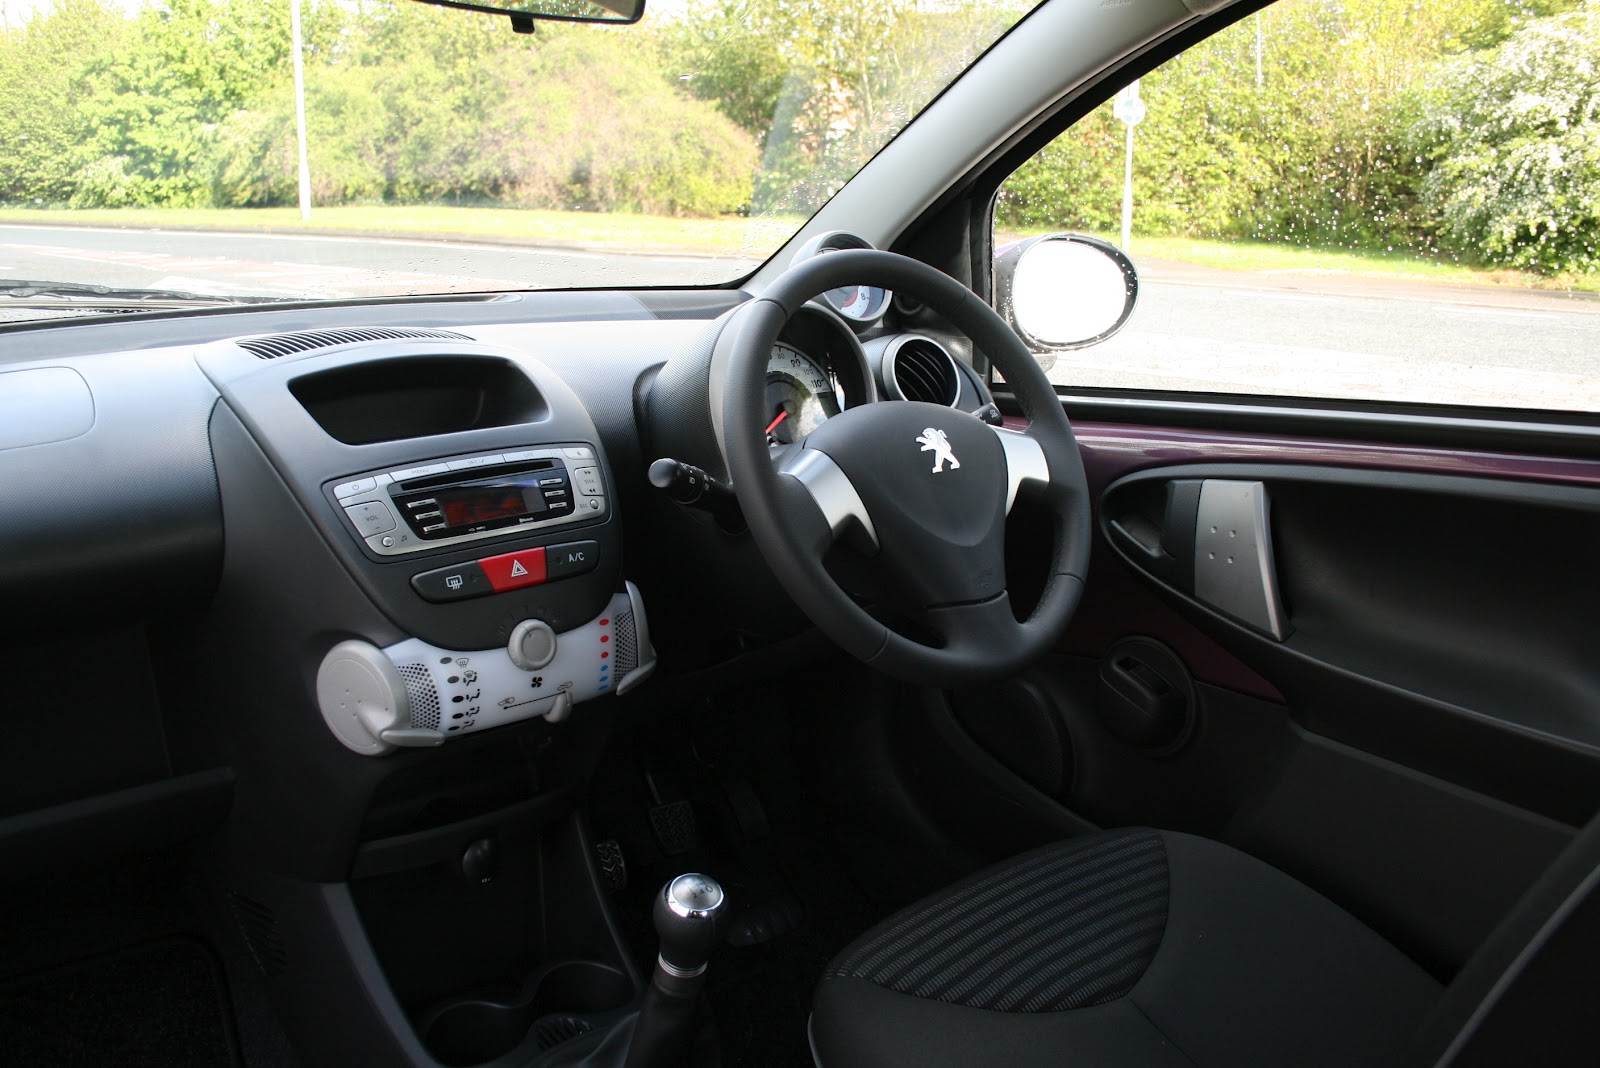 Peugeot 107 test drive review 